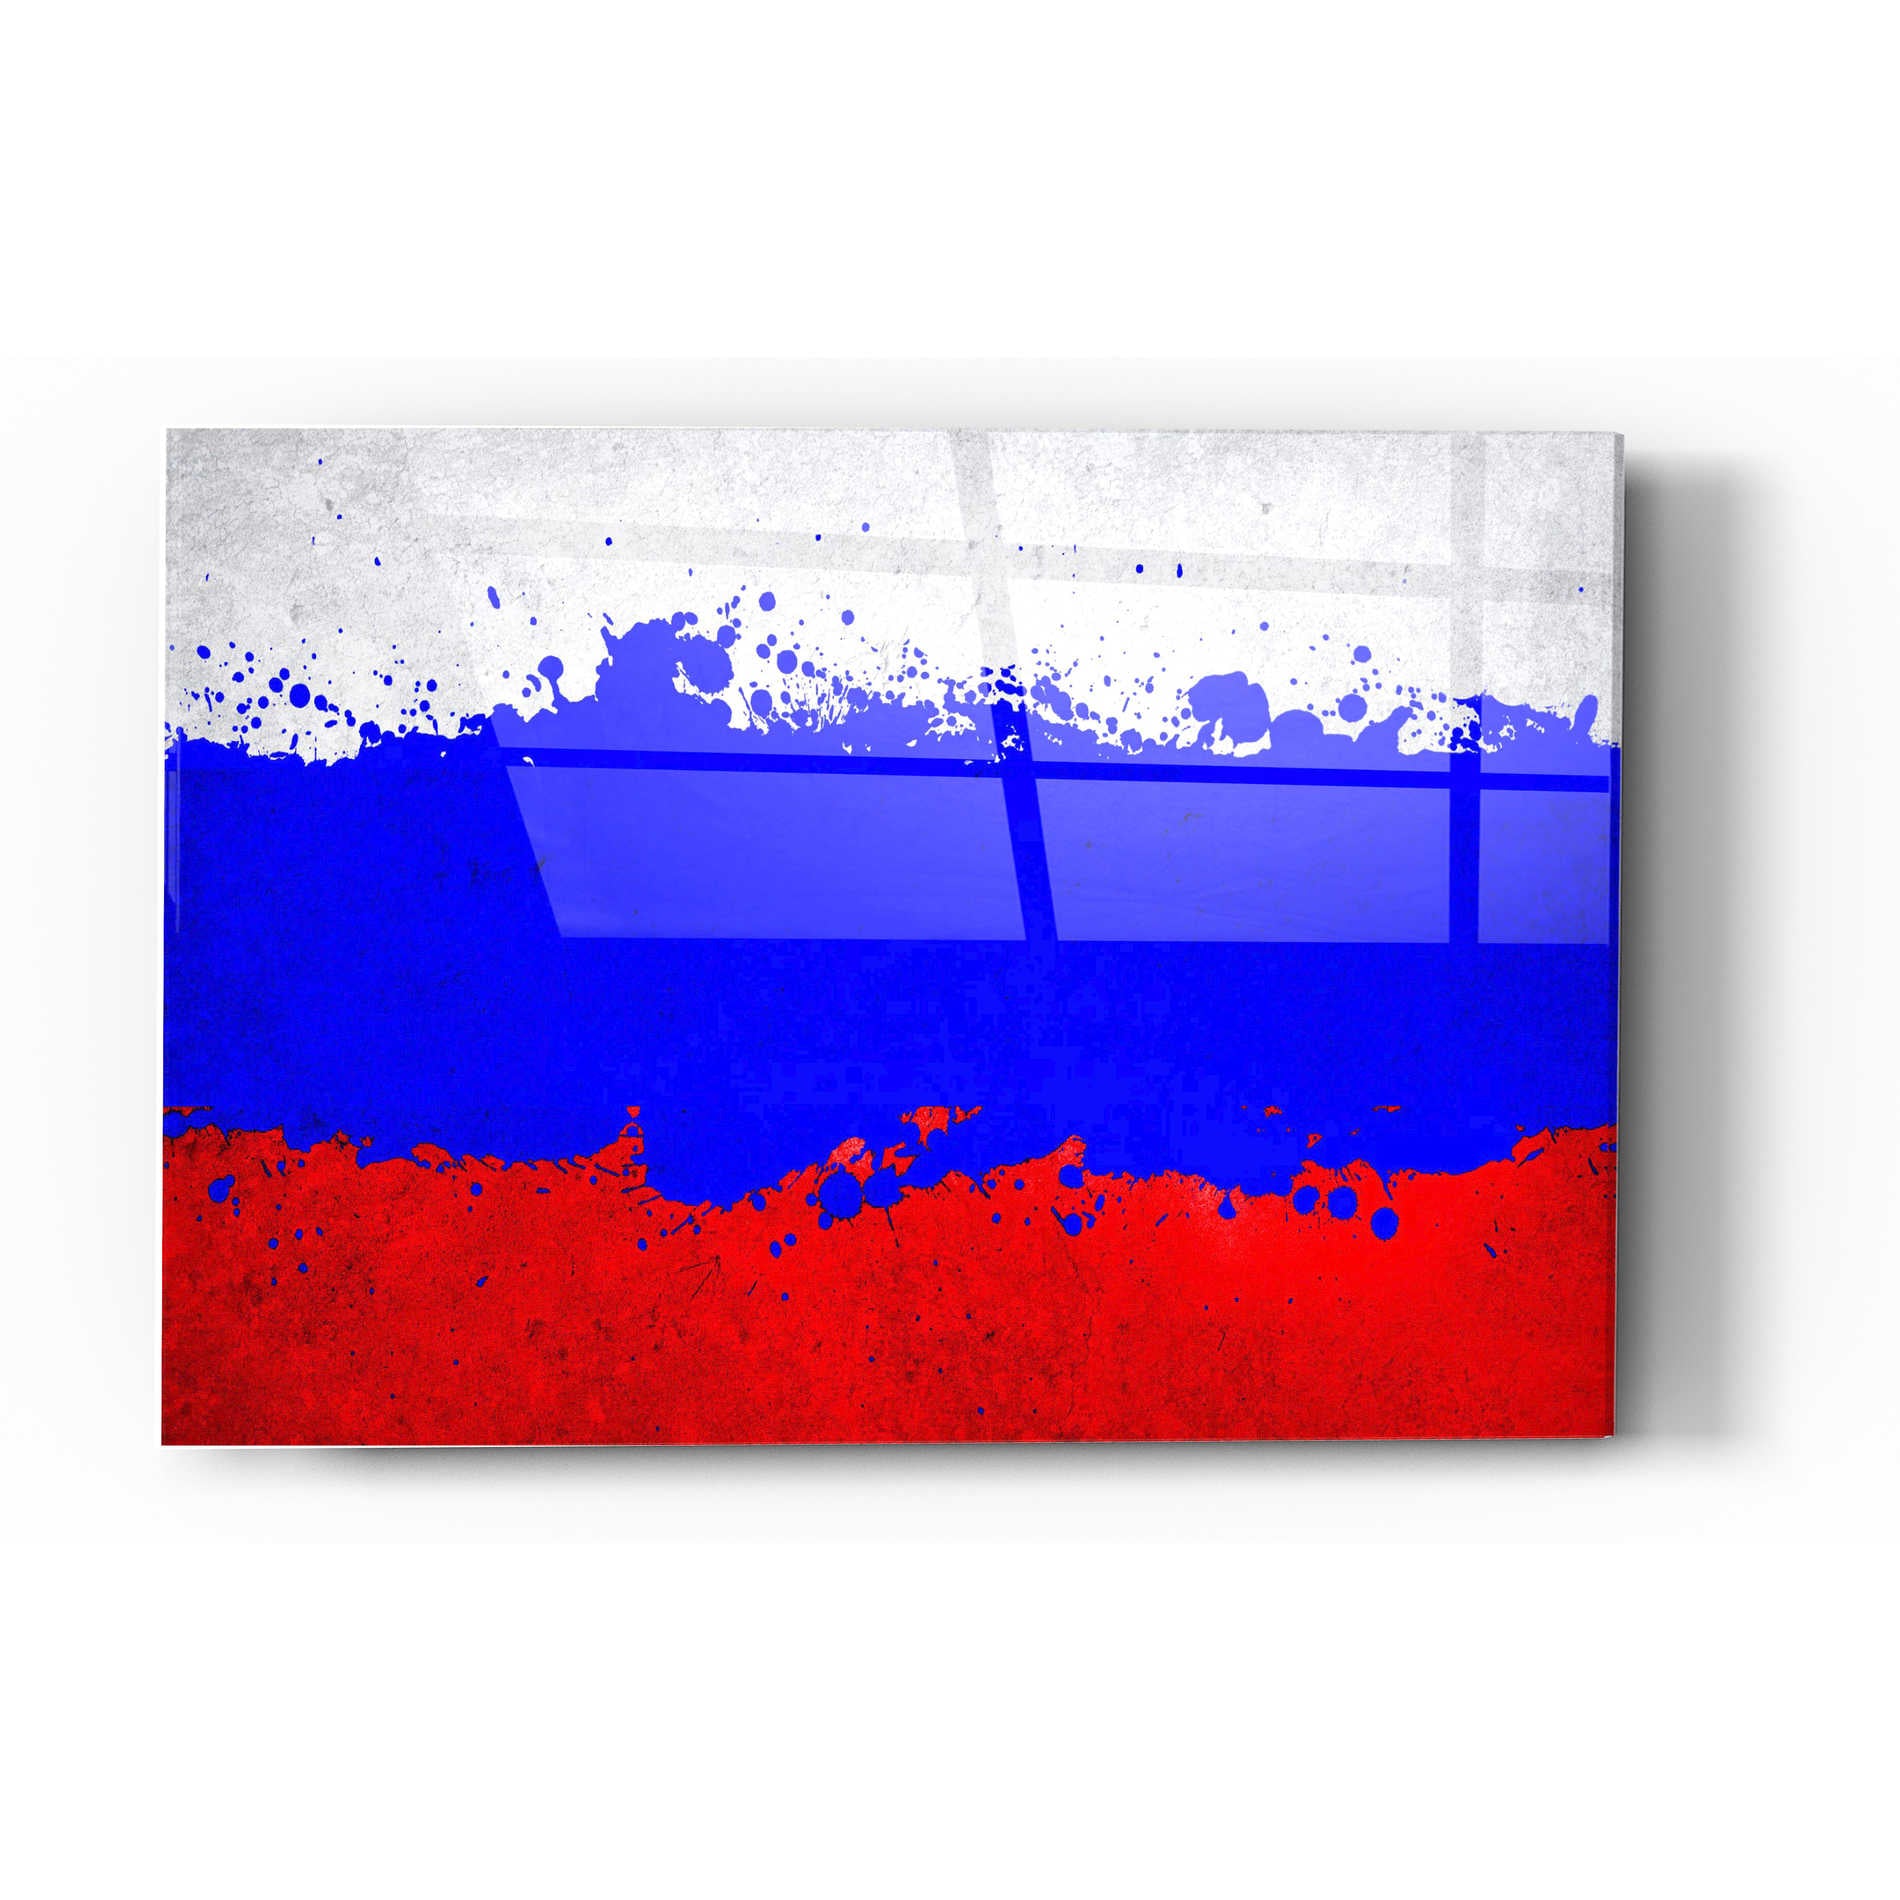 Epic Art "Russia" Acrylic Glass Wall Art,16x24